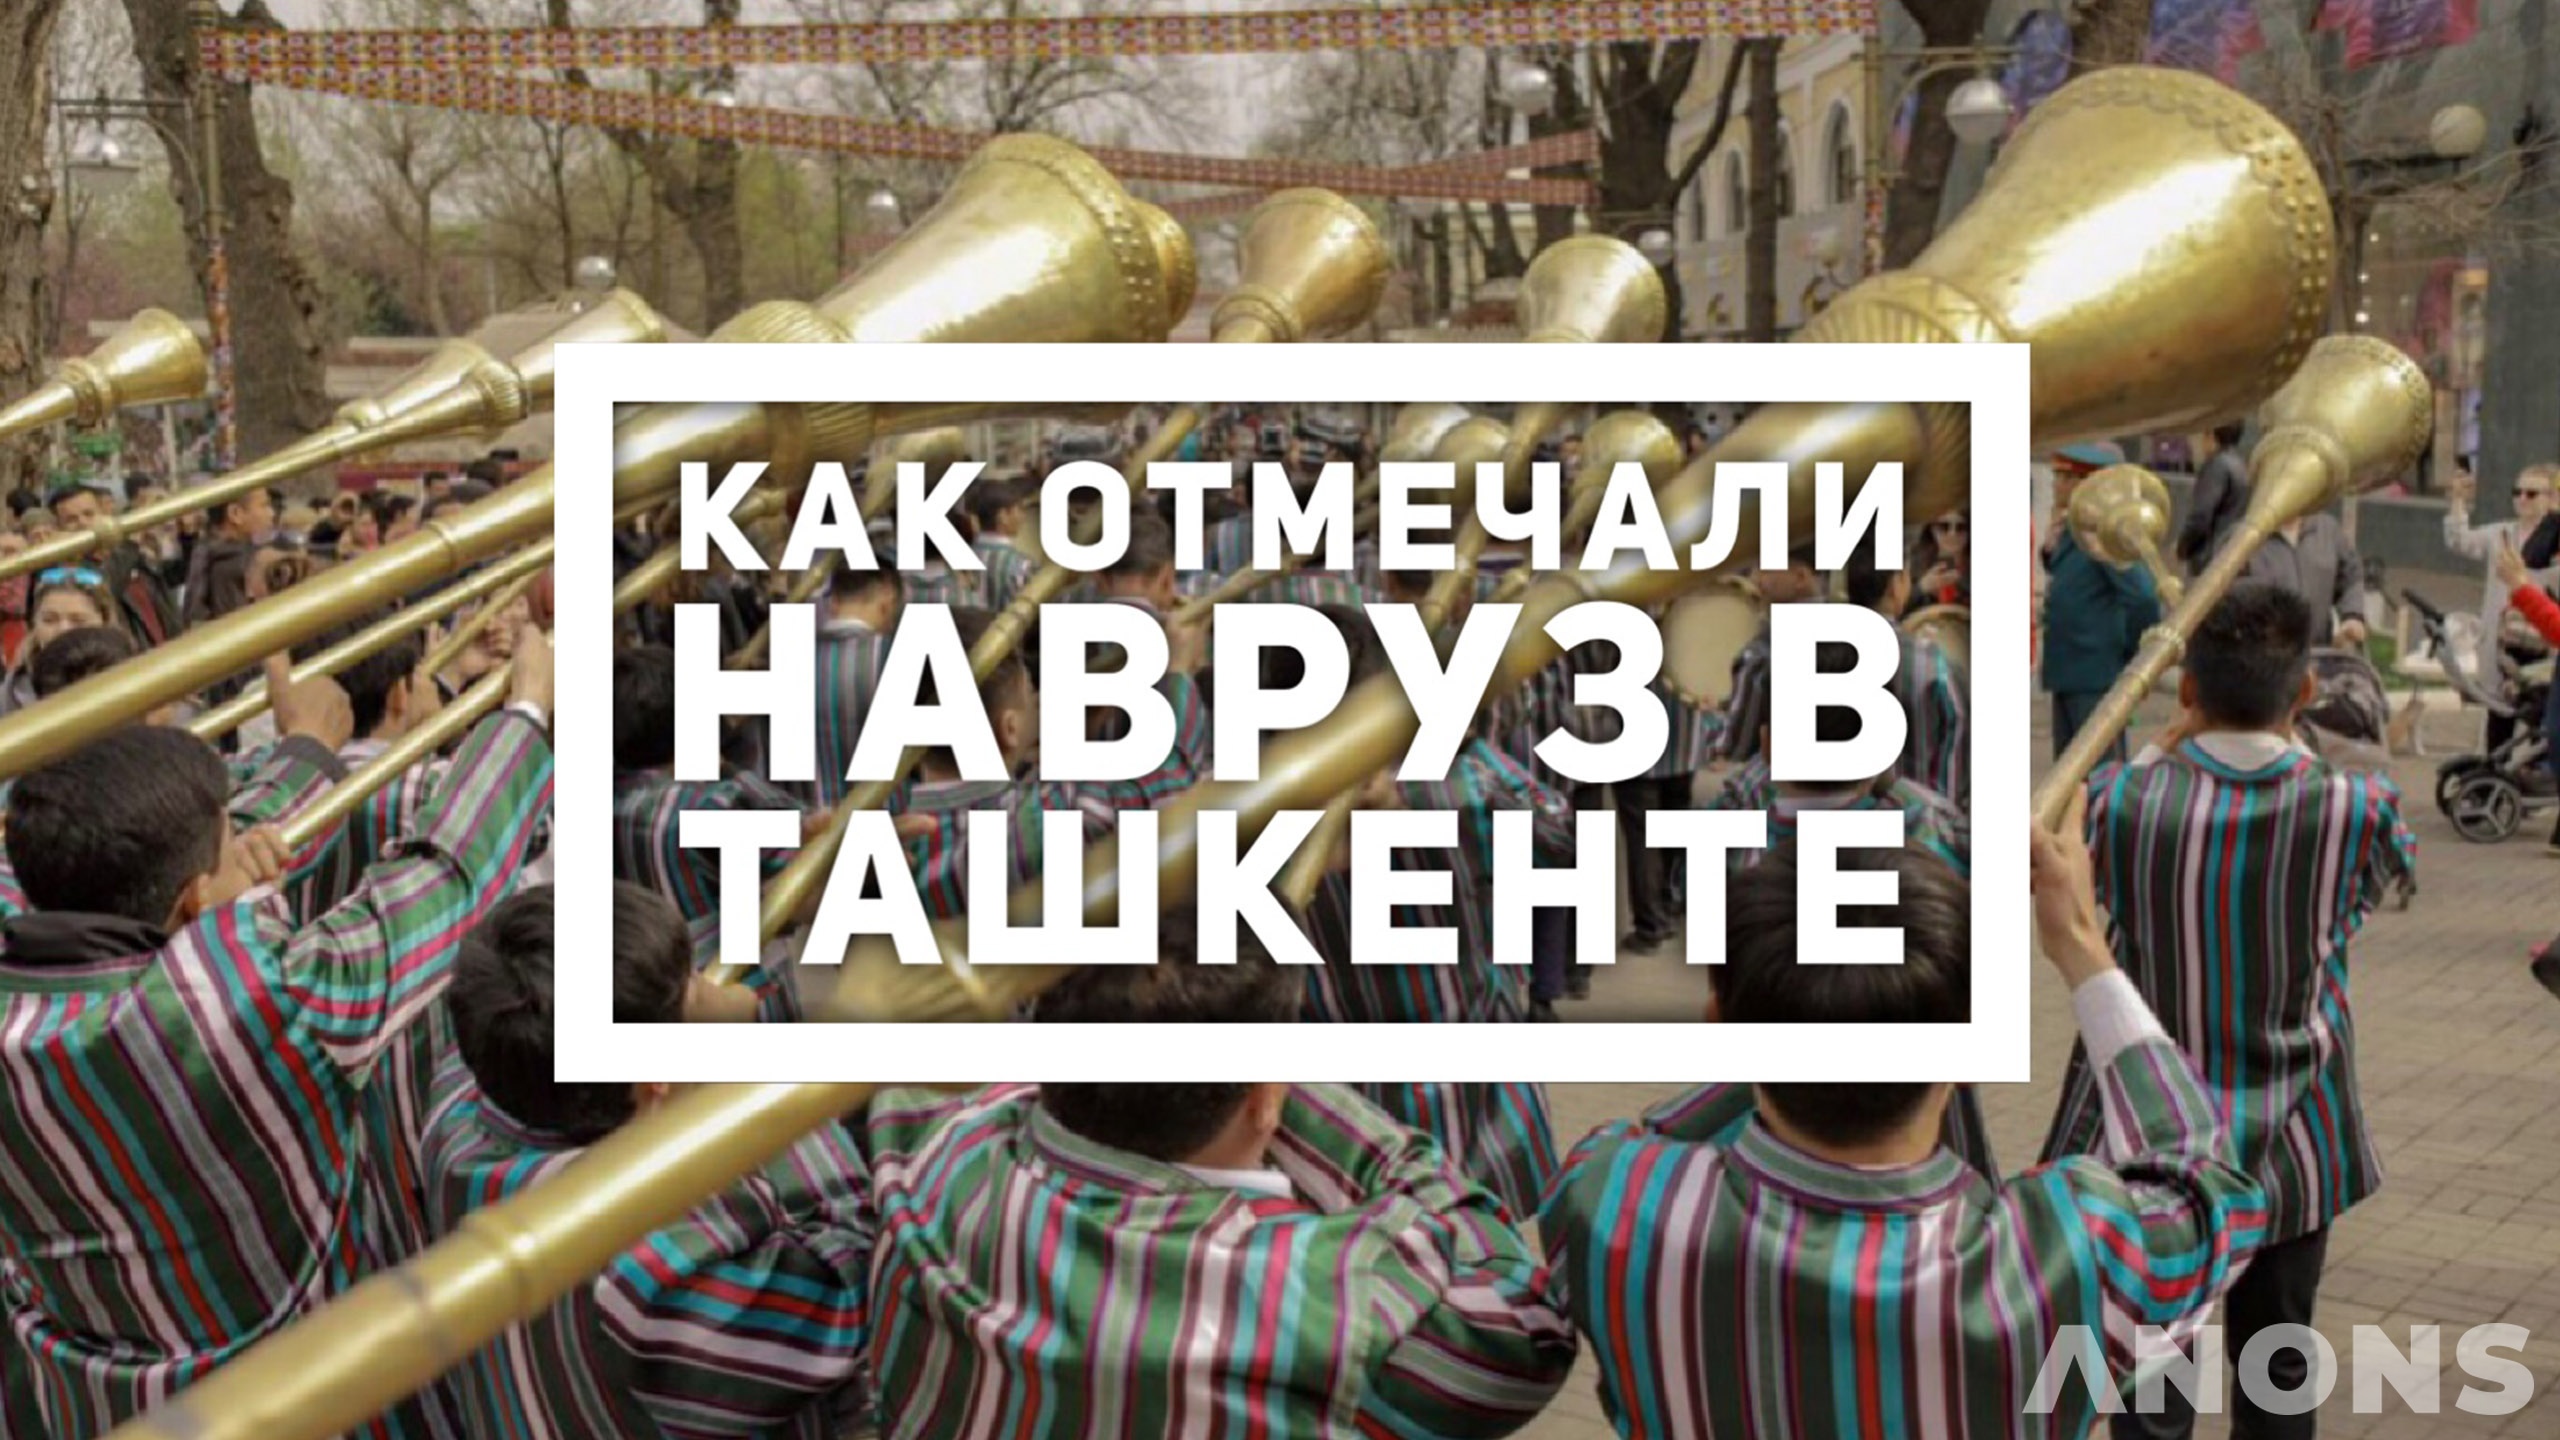 Как праздновали Навруз жители и гости Ташкента